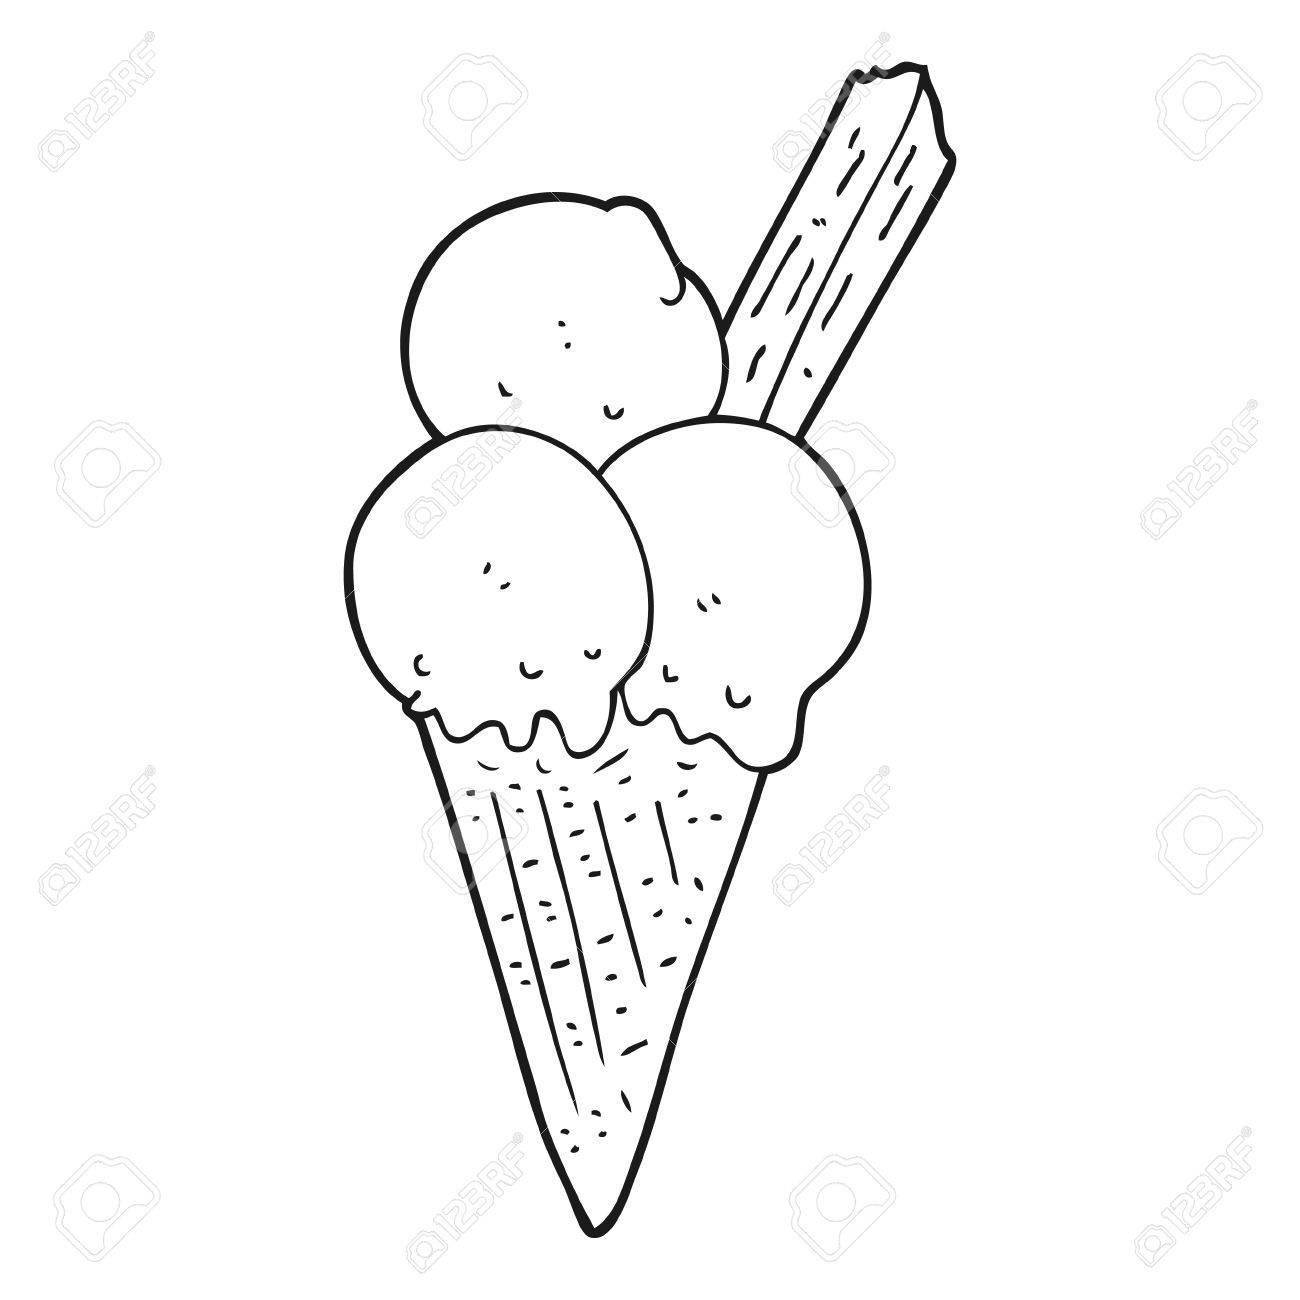 icecream clipart ice creamblack white